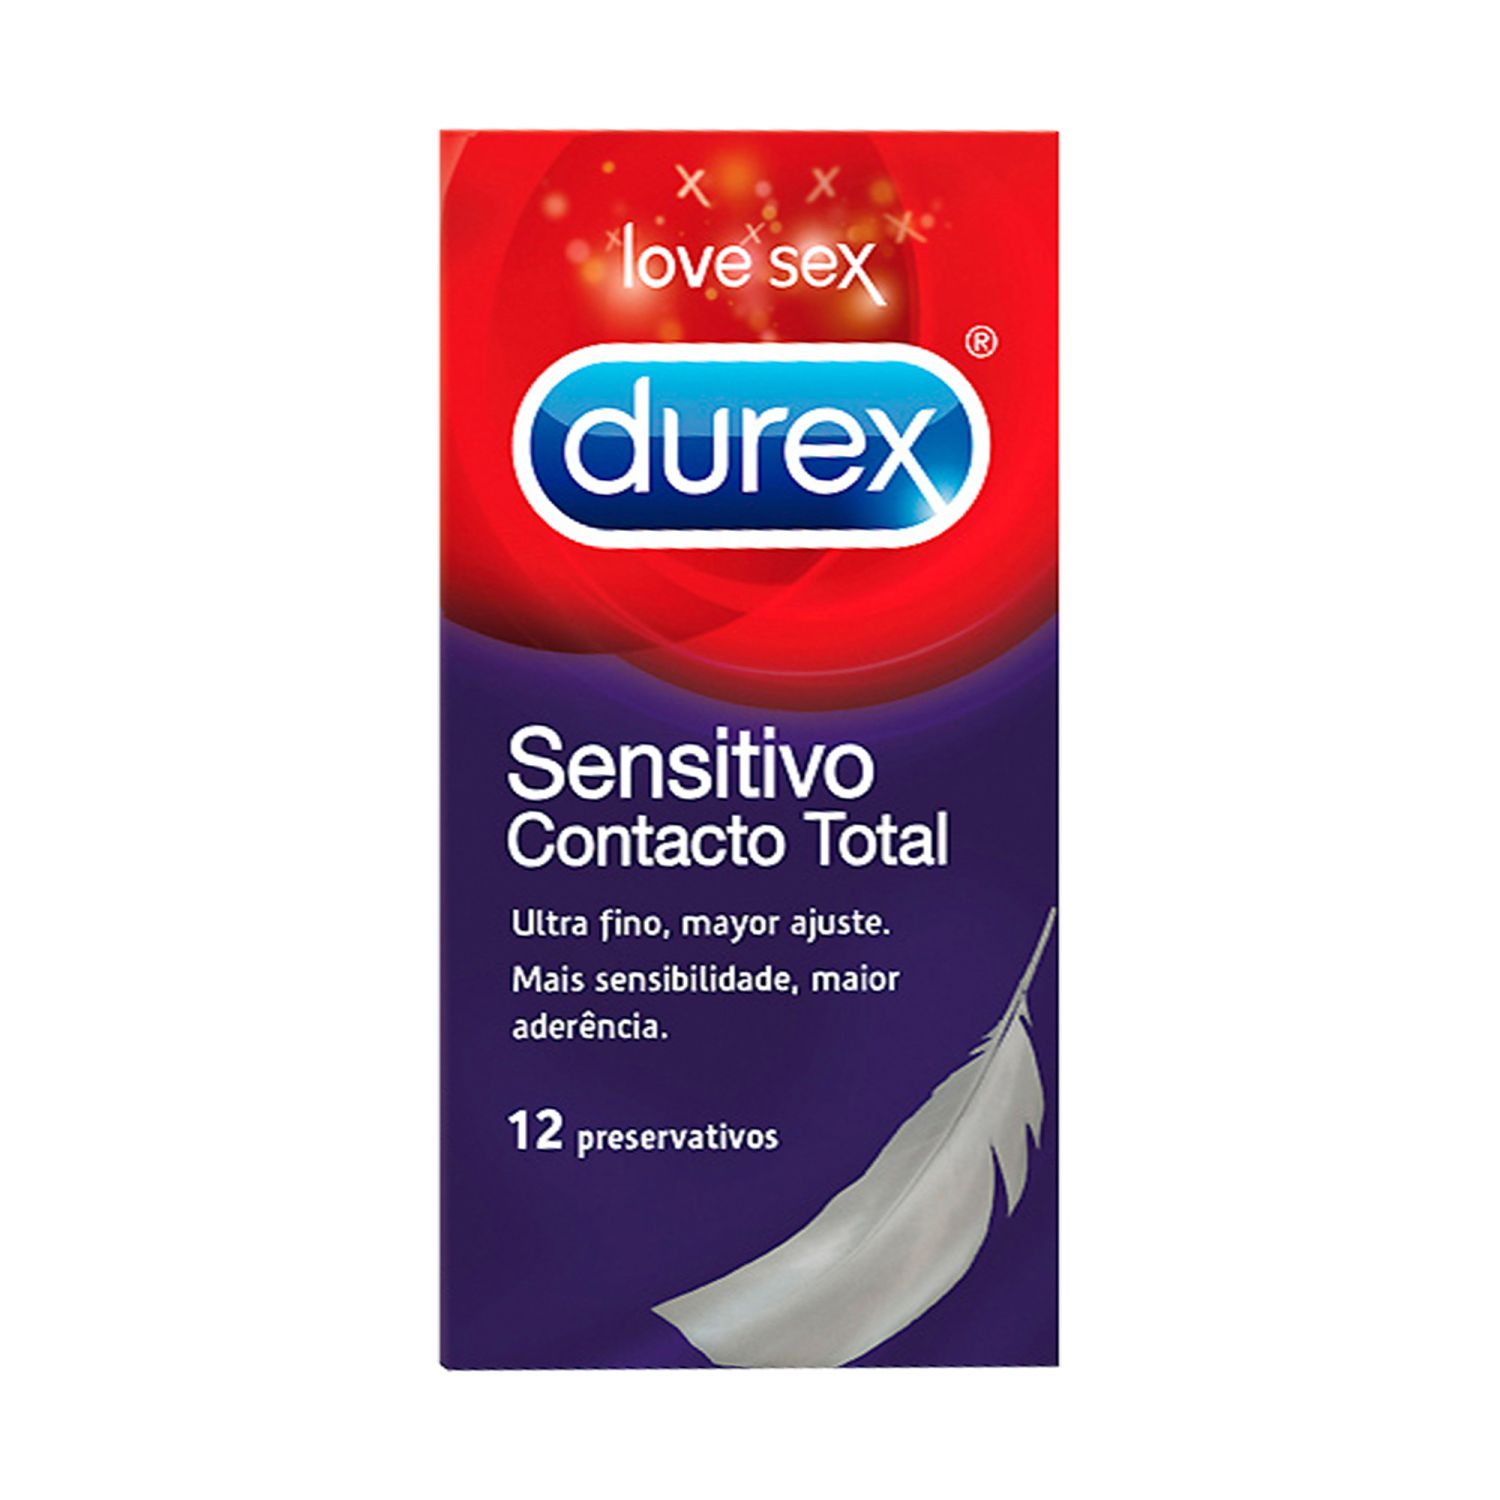 durex sensitivo contacto total preservativos 12uds